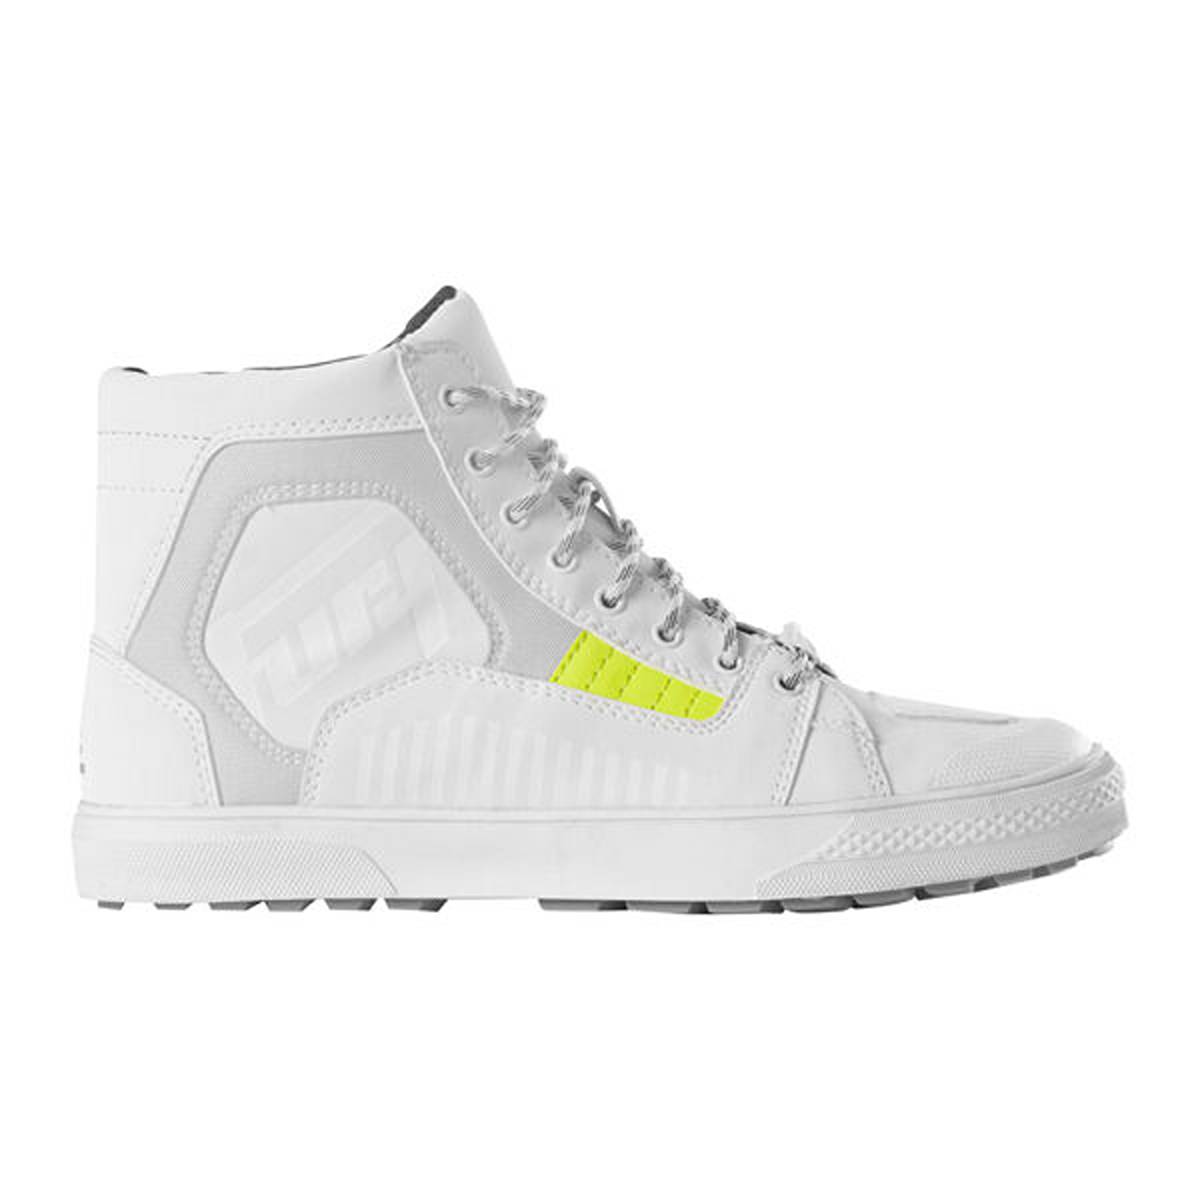 Image of Furygan Sacramento D30 Shoes White Grey Size 45 ID 3435980368173